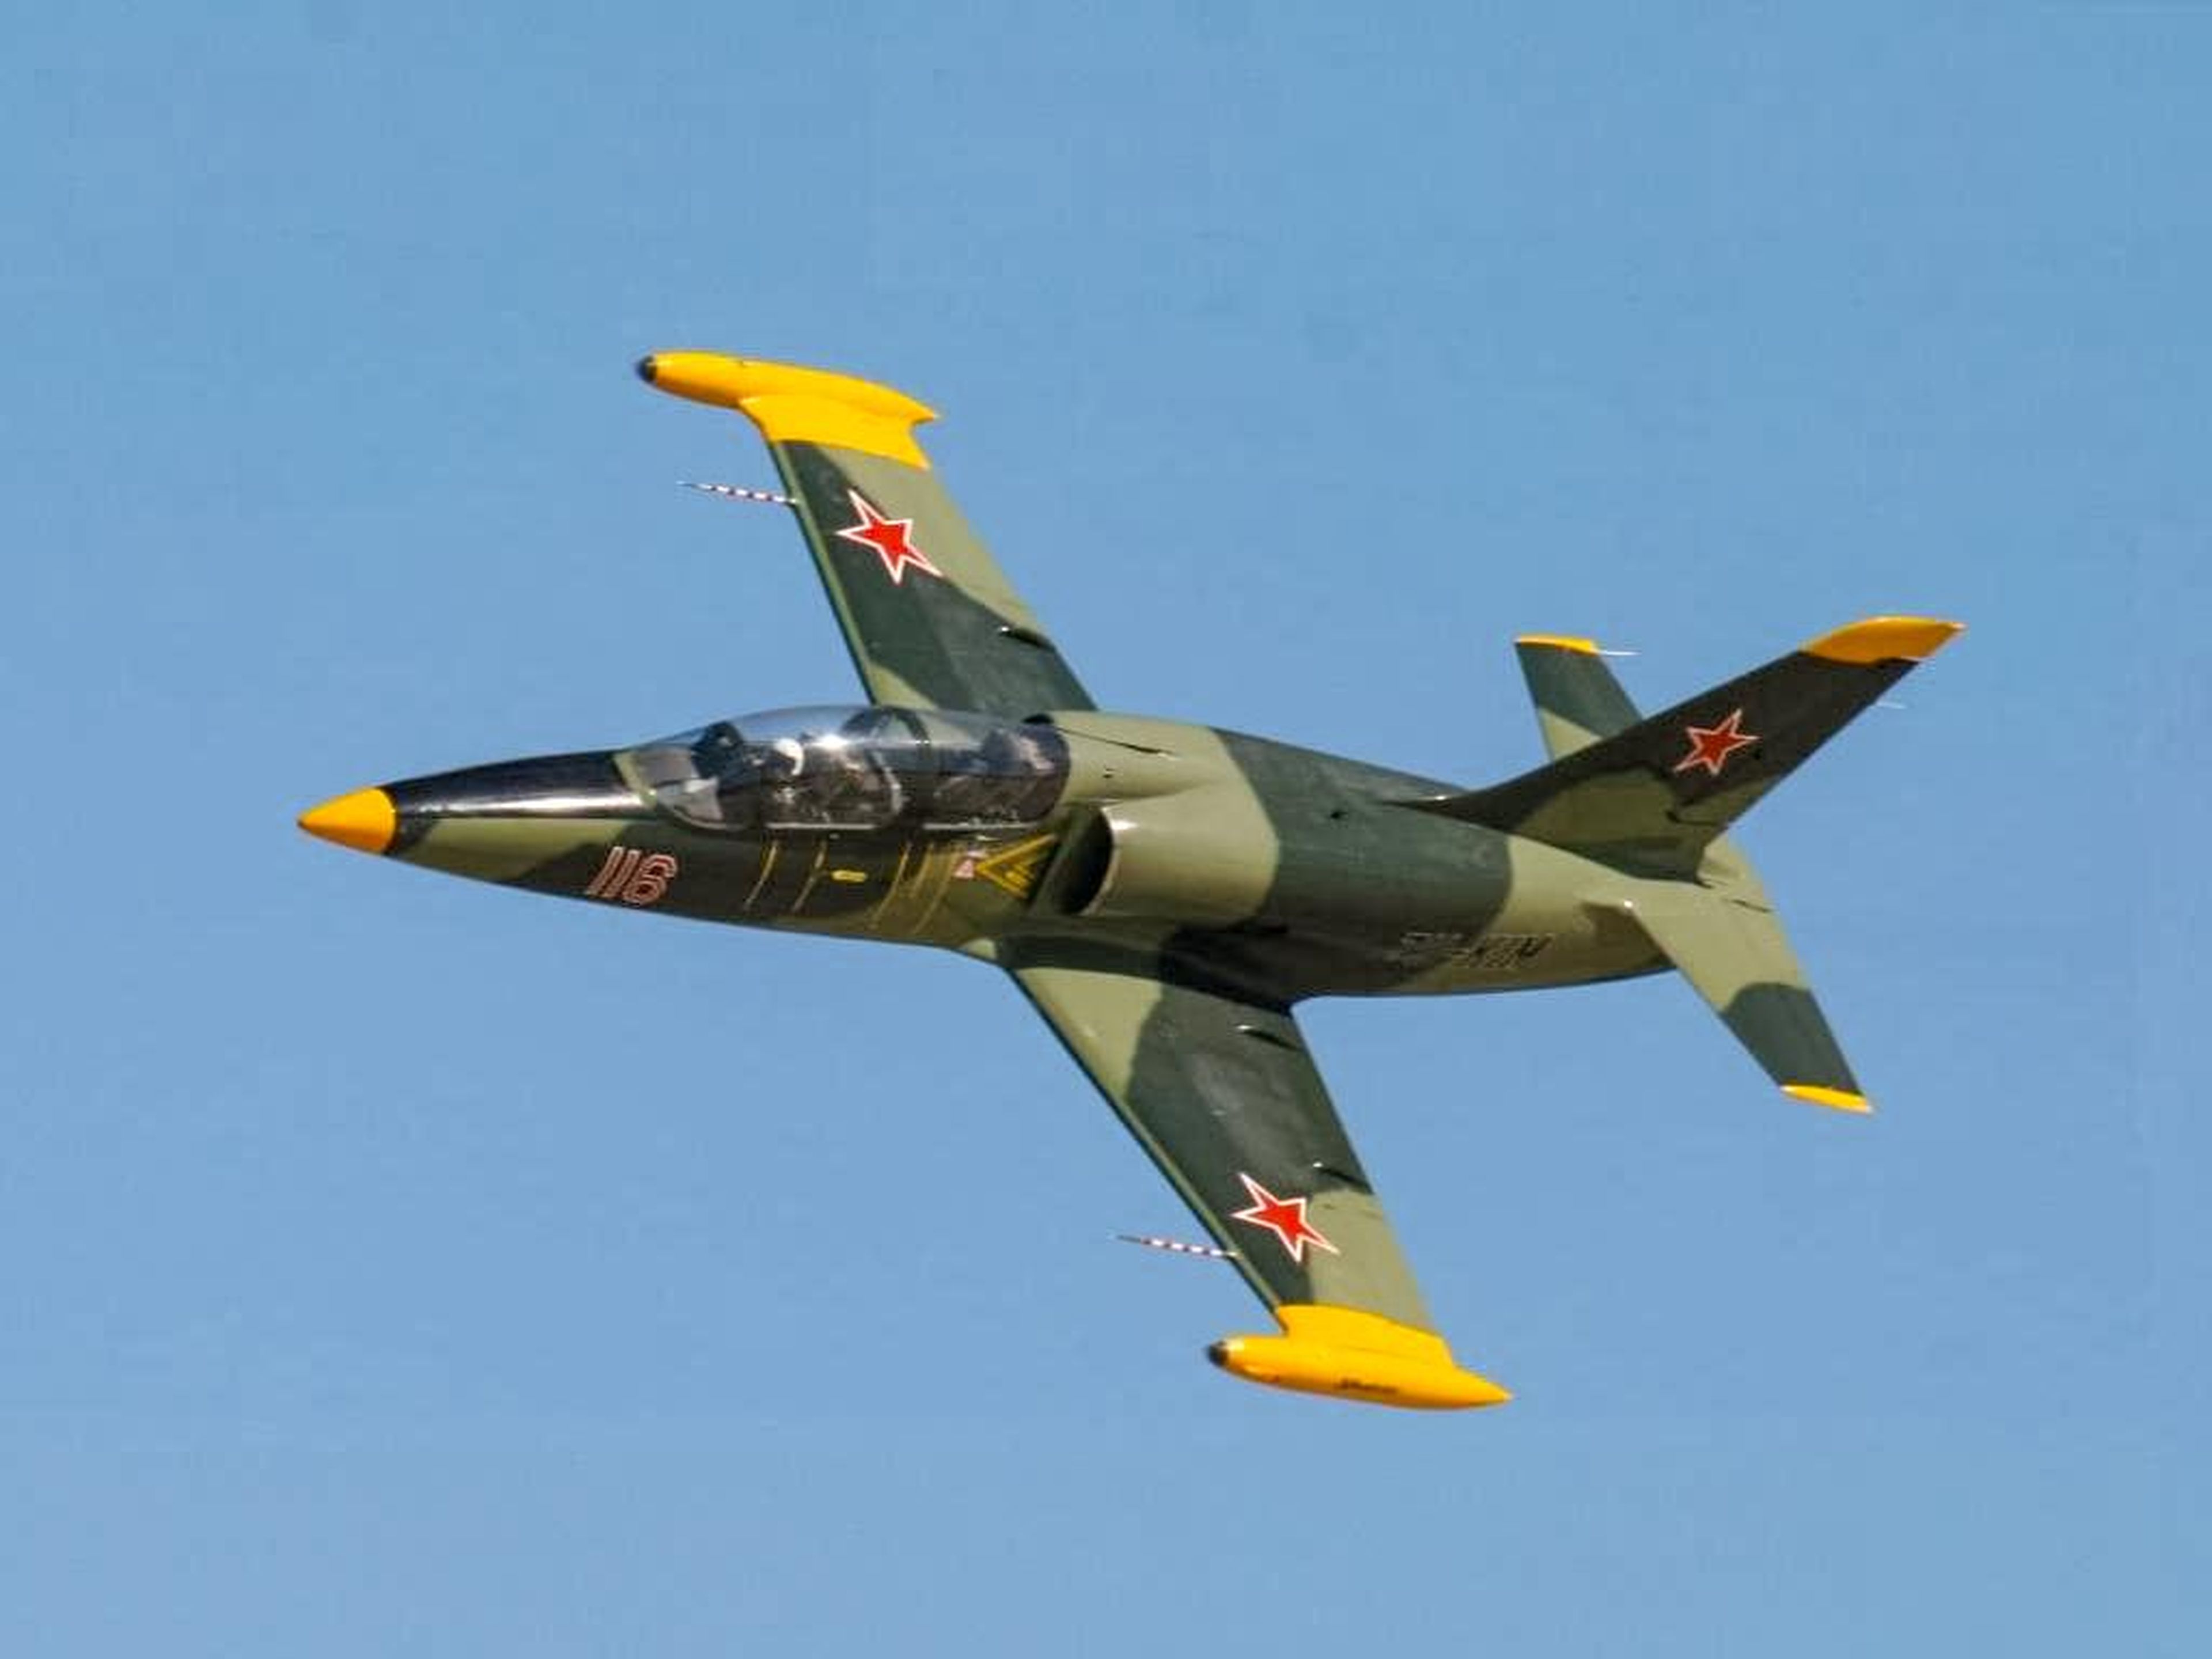 A Soviet-era Aero L-39 Albatros jet fighter.